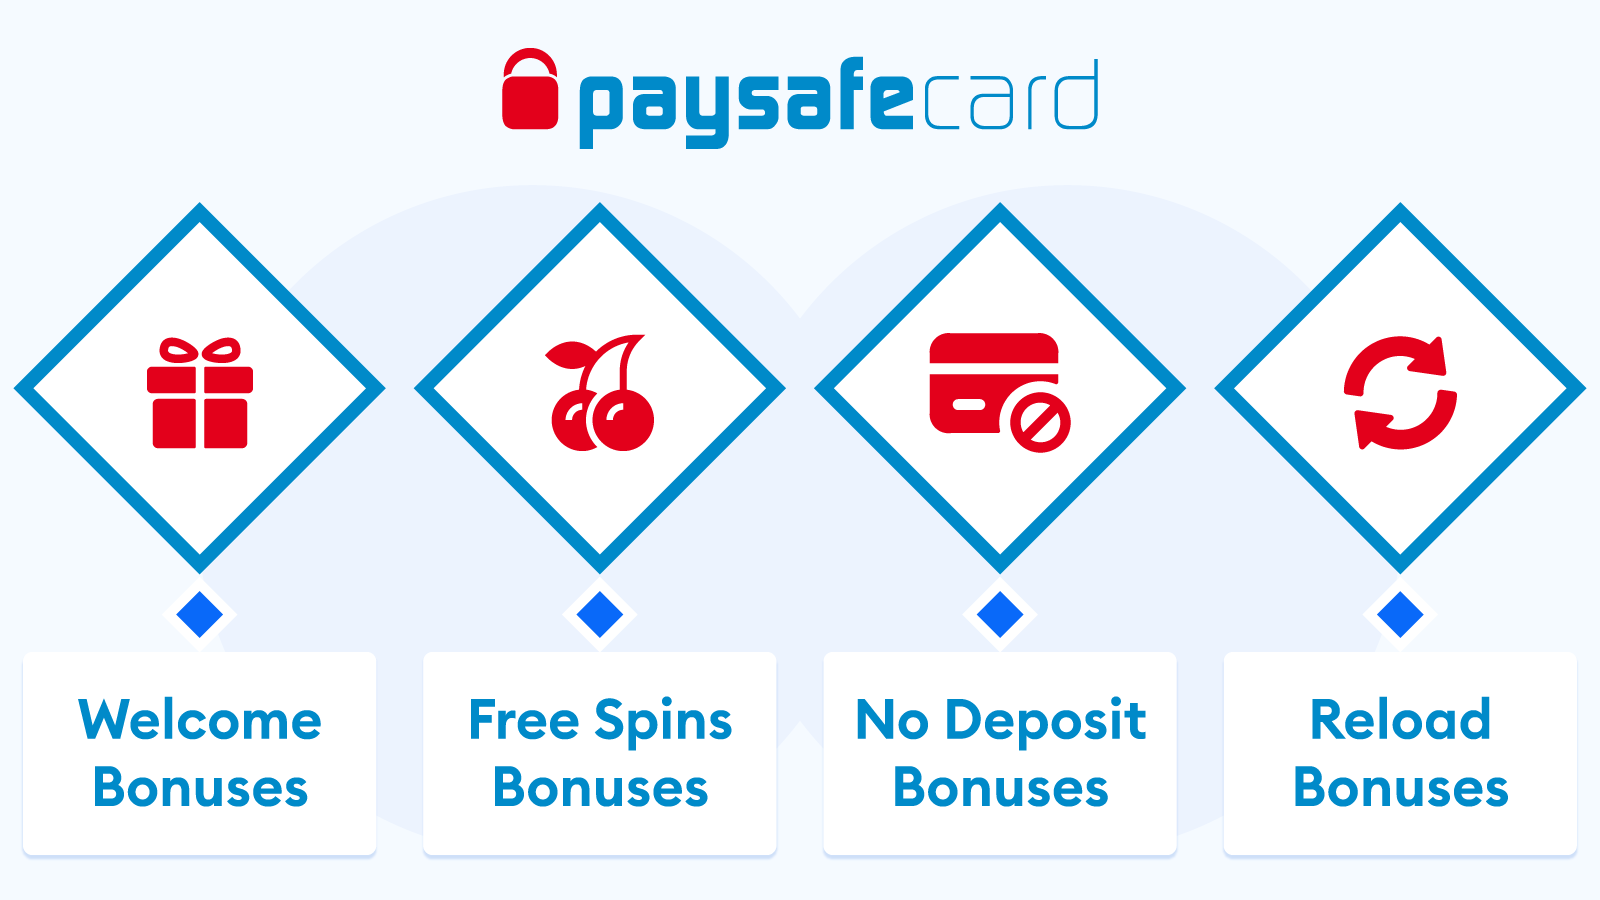 Types of Casino Paysafecard Bonuses